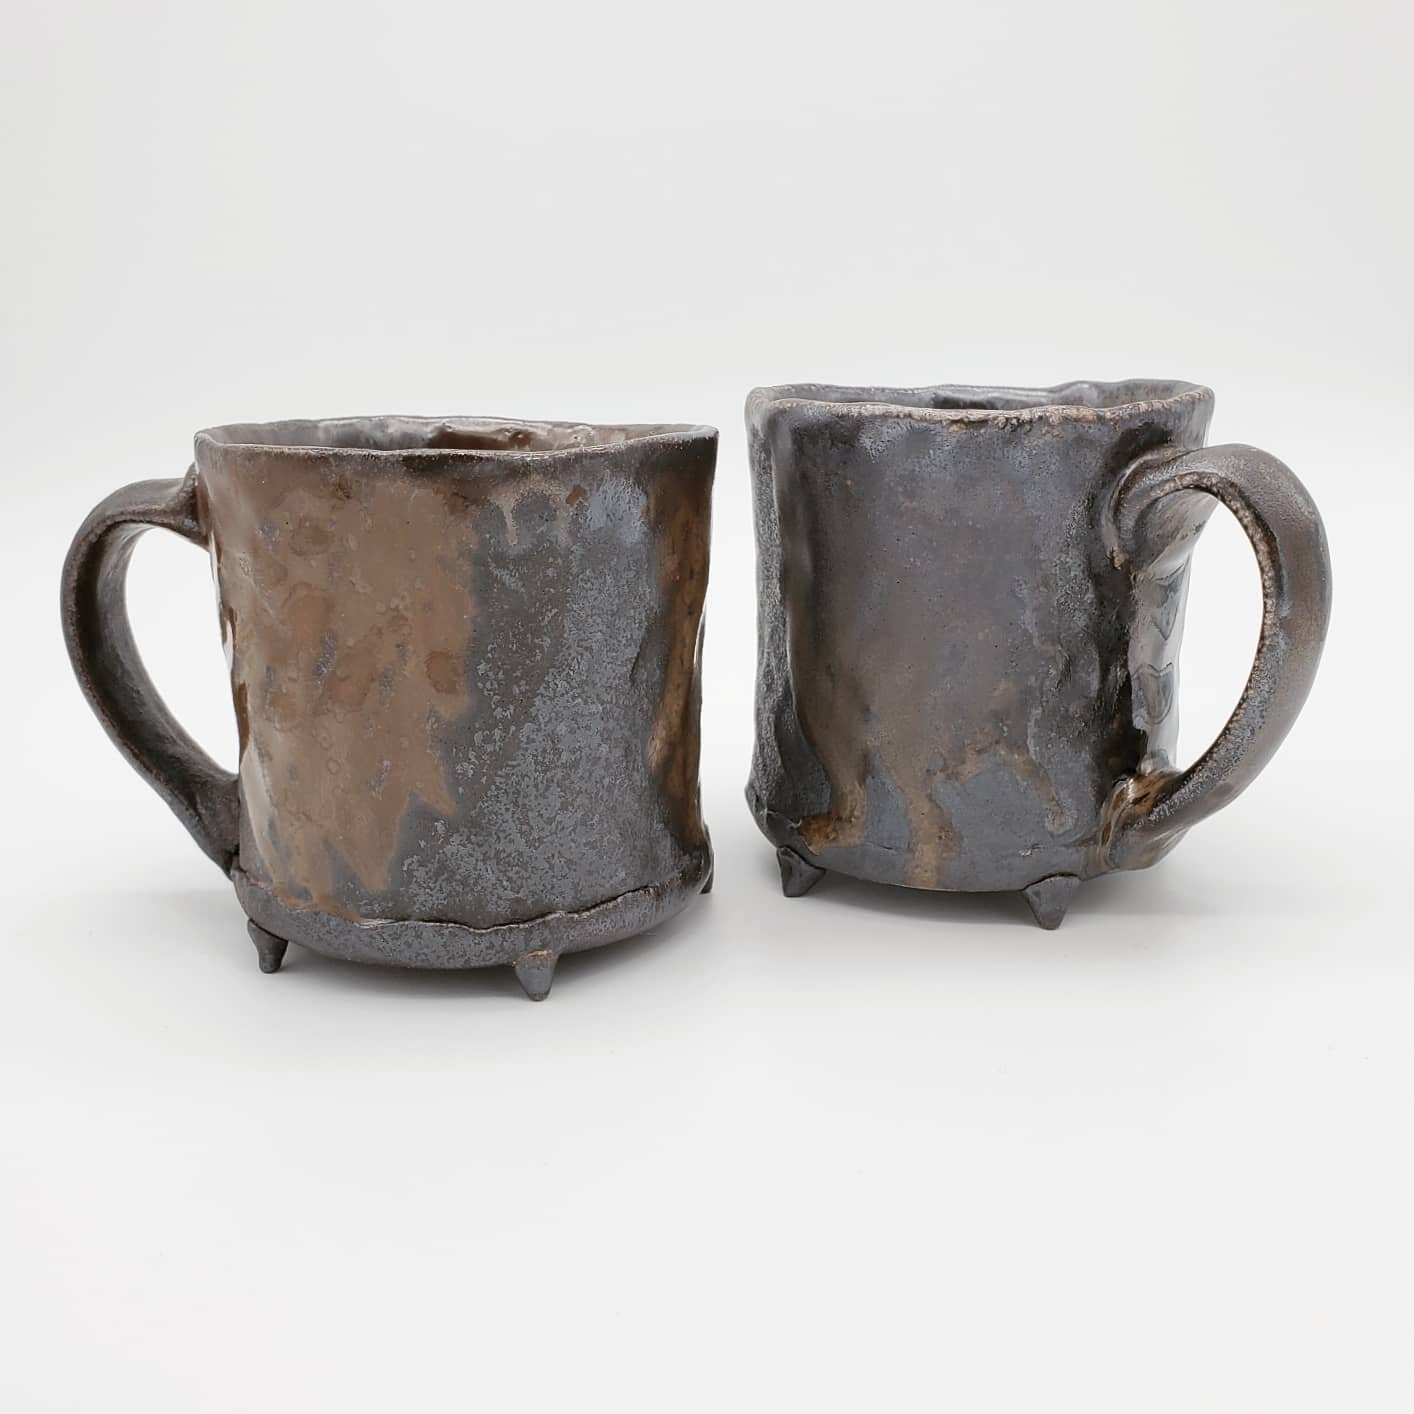 Pinched mugs from the #rosecreekpottery wood soda kiln

------------

#mugshotmonday #ceramics #clay #pottery #cup #mug #stoneware #sodafired #woodfired #pinchpot  #madebyhand #handmadepottery #madeinathensga #womenwhowoodfire